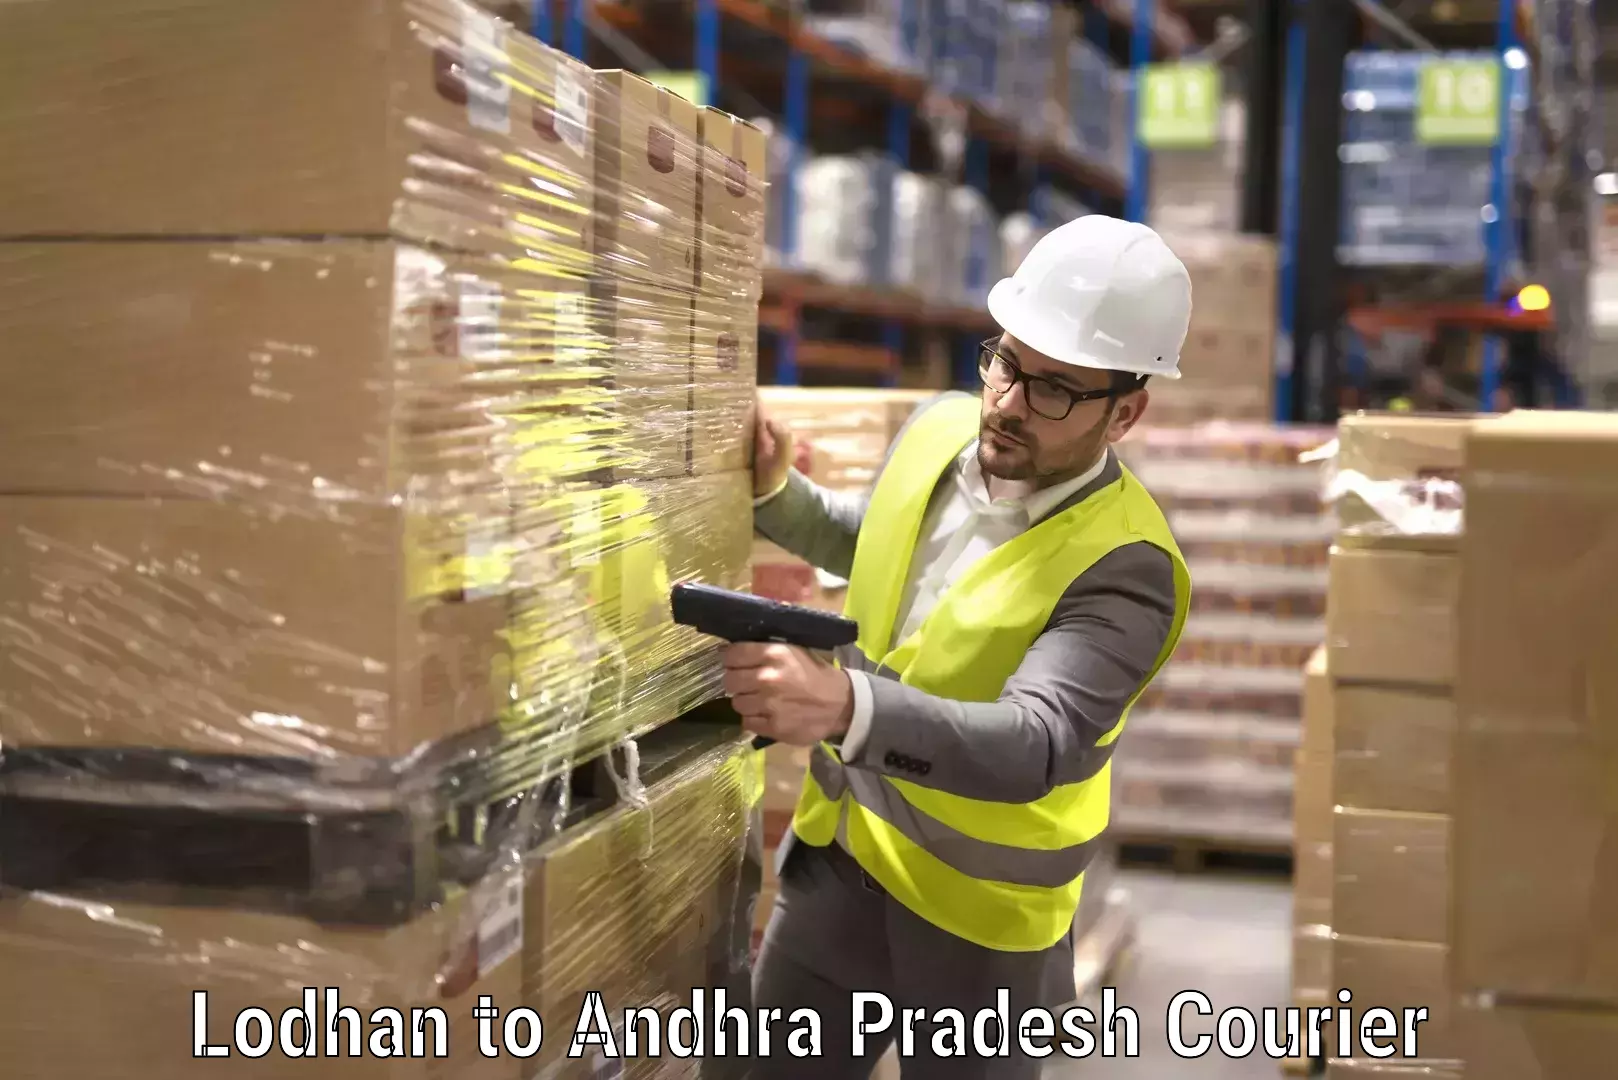 Professional movers Lodhan to Andhra Pradesh